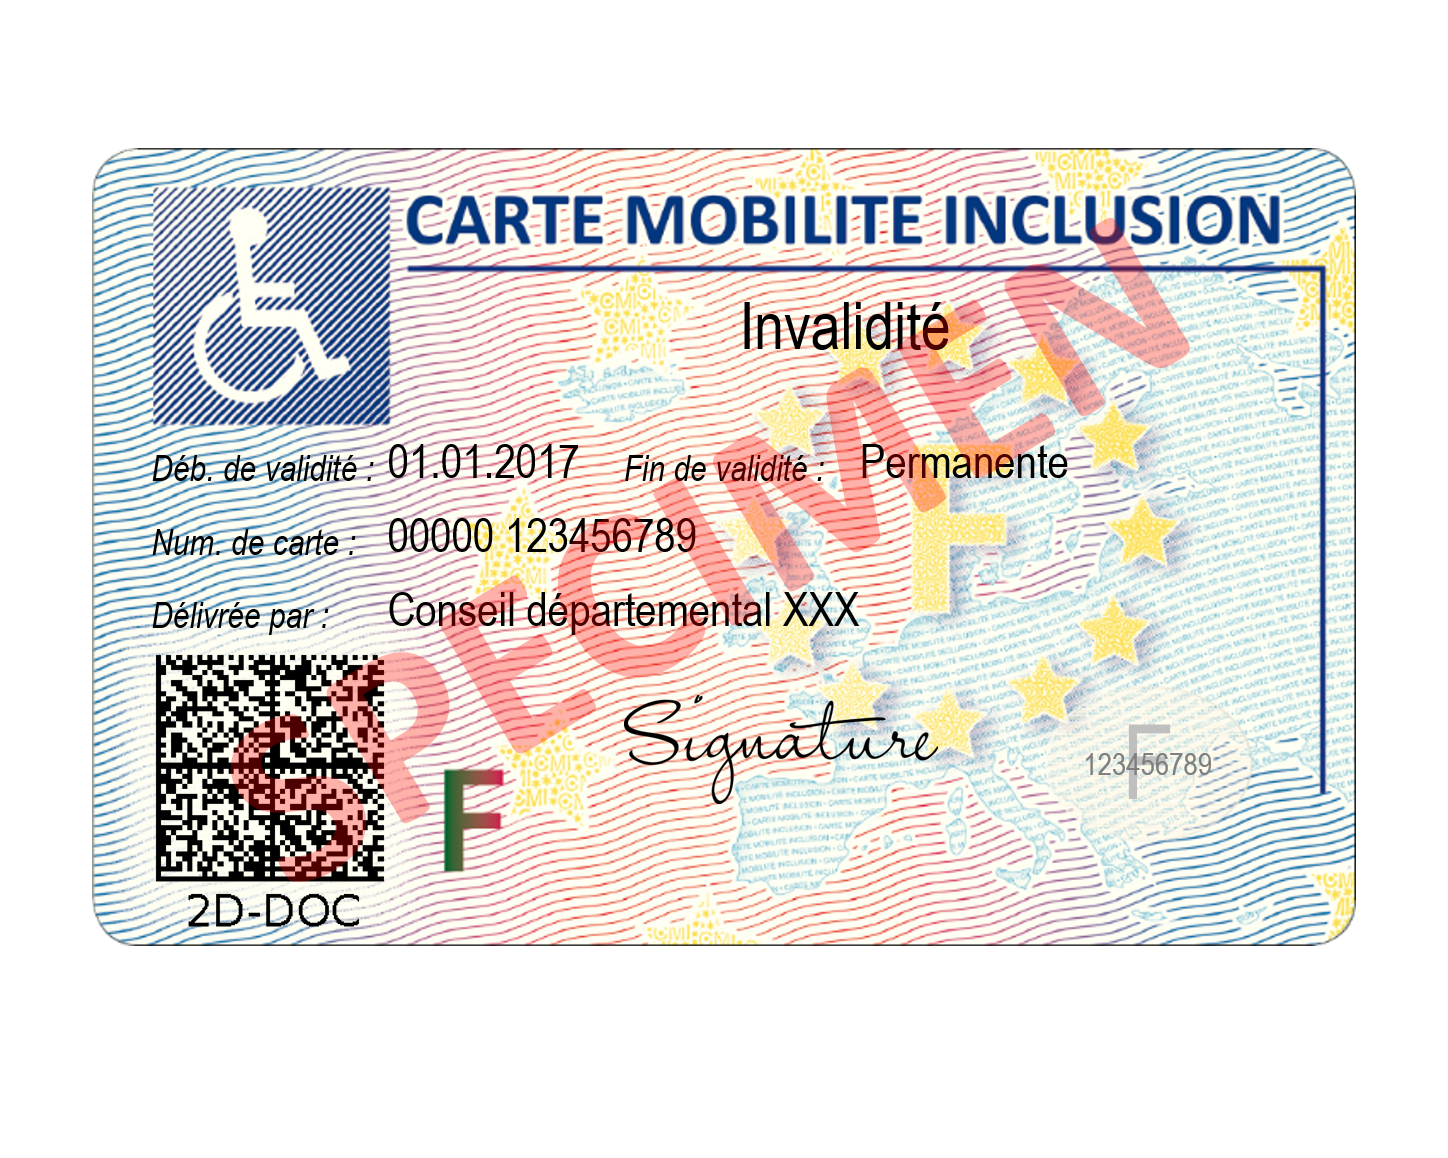 la carte mobilité inclusion ou CMI - Smartphone iD